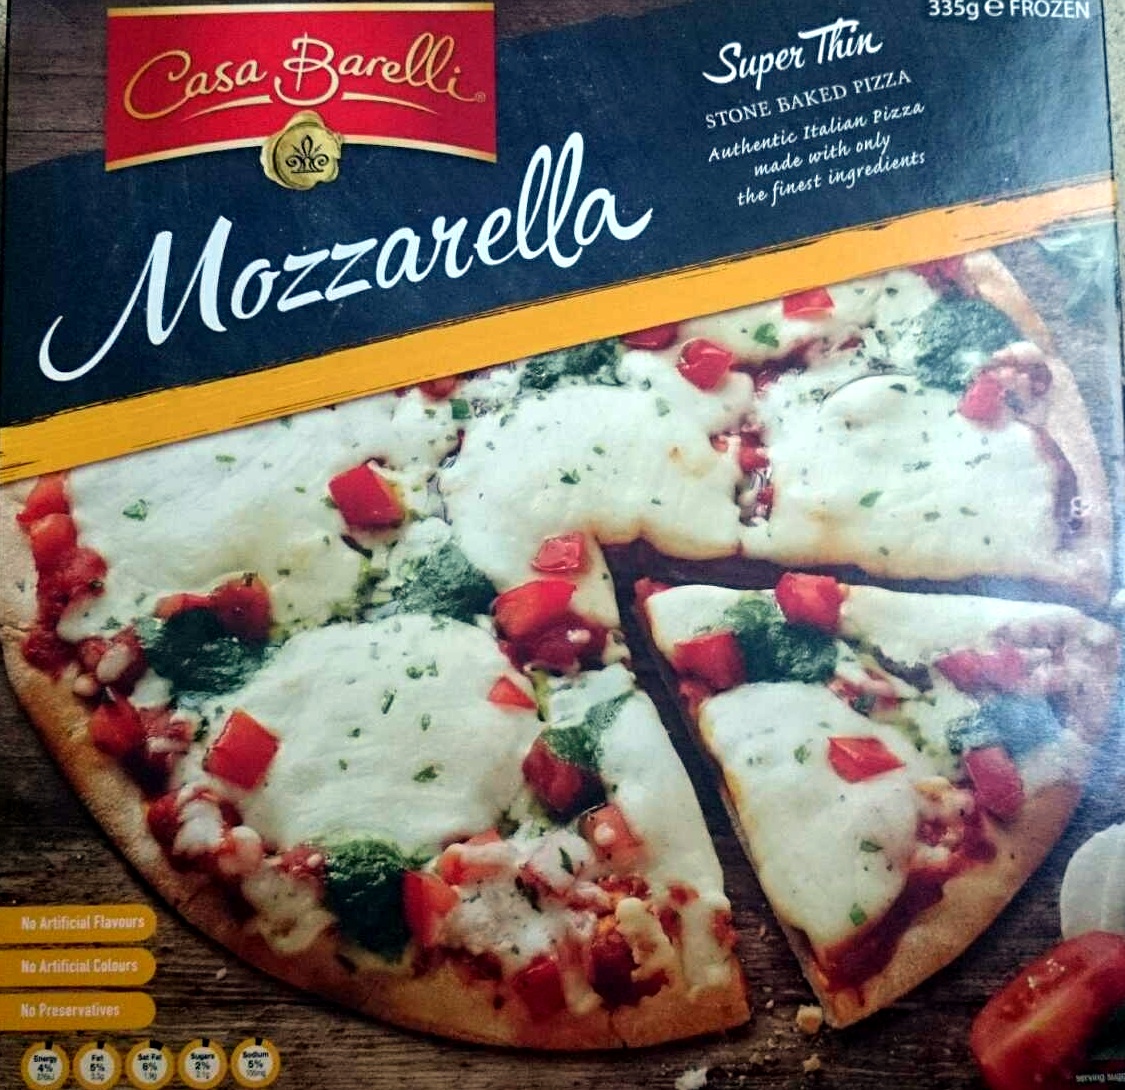 Mozarella Super Thin Stone Baked Pizza - Product